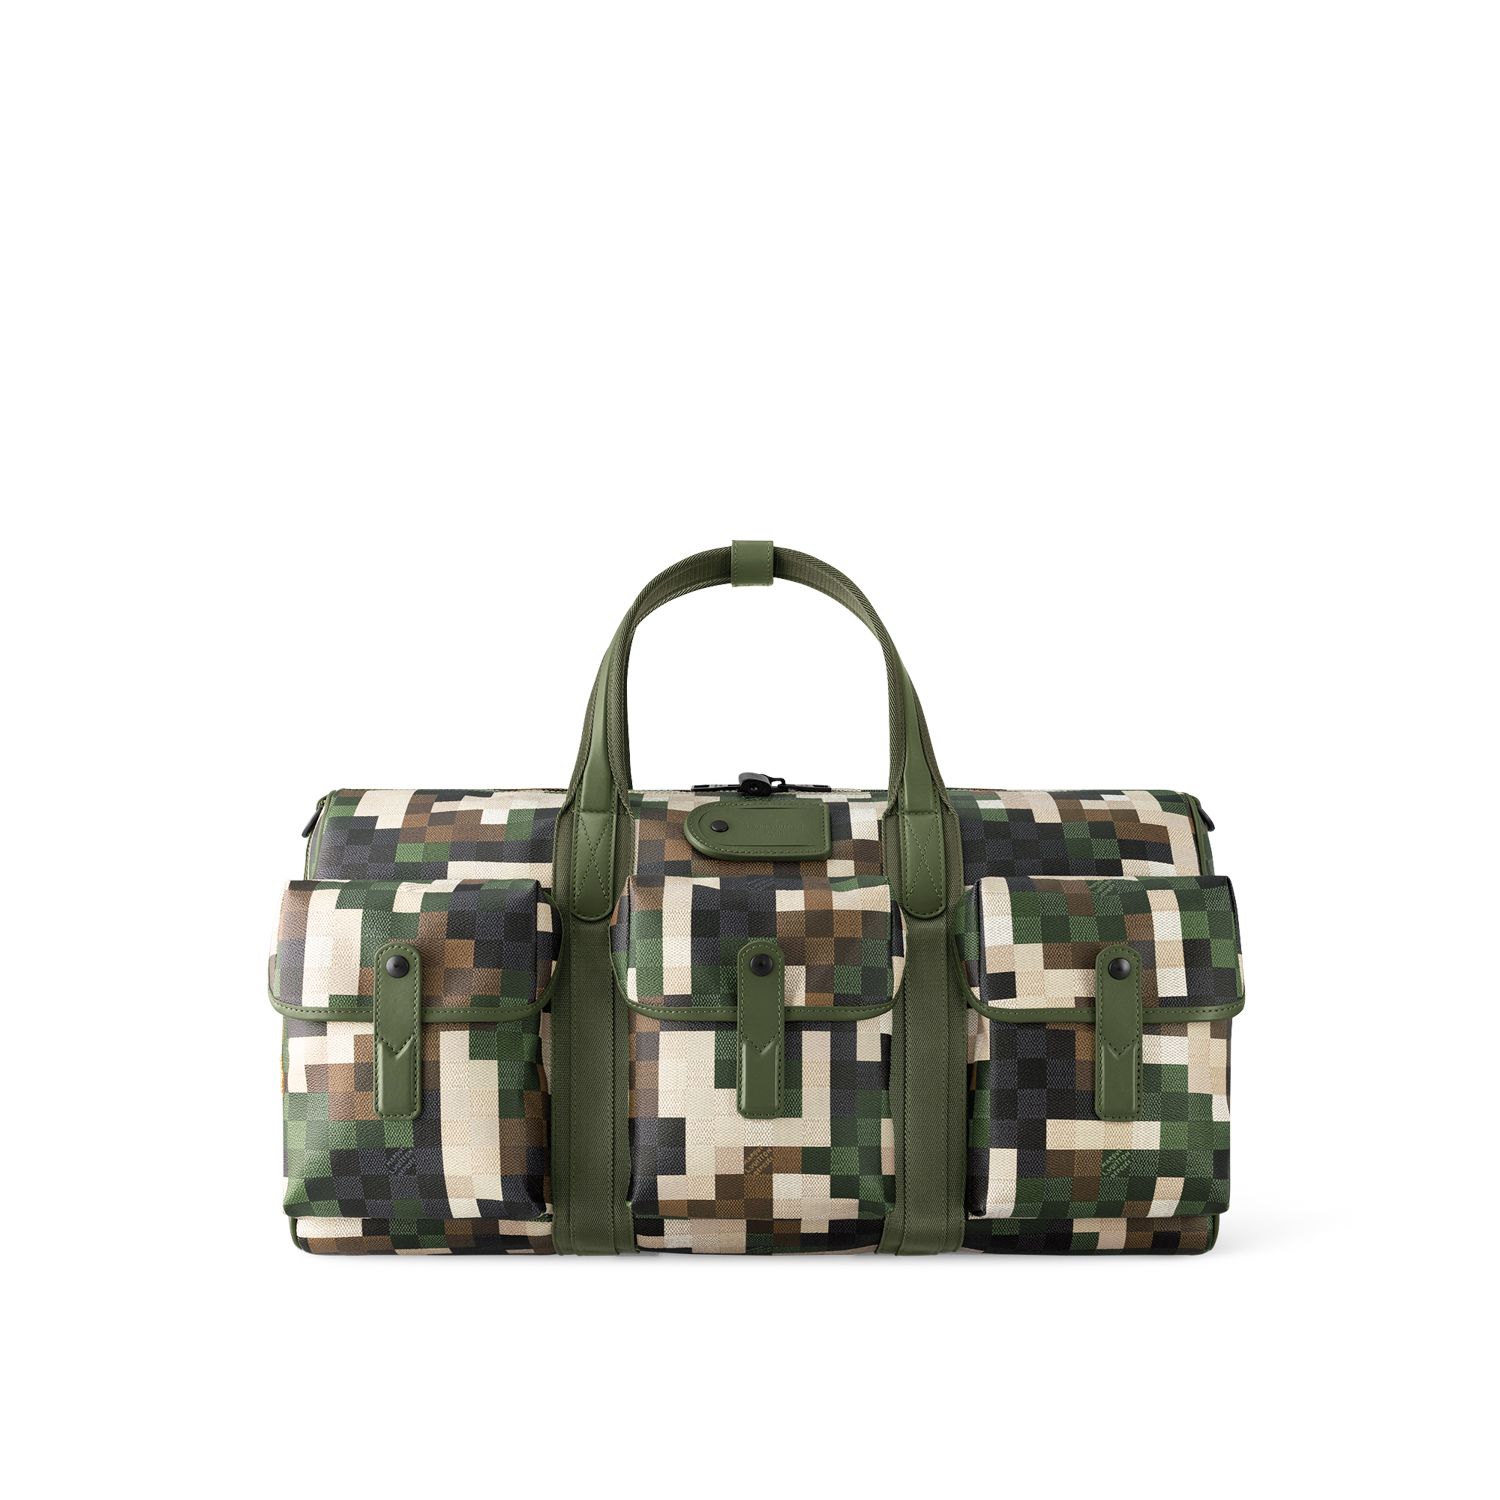 pixelated camouflage travel bag